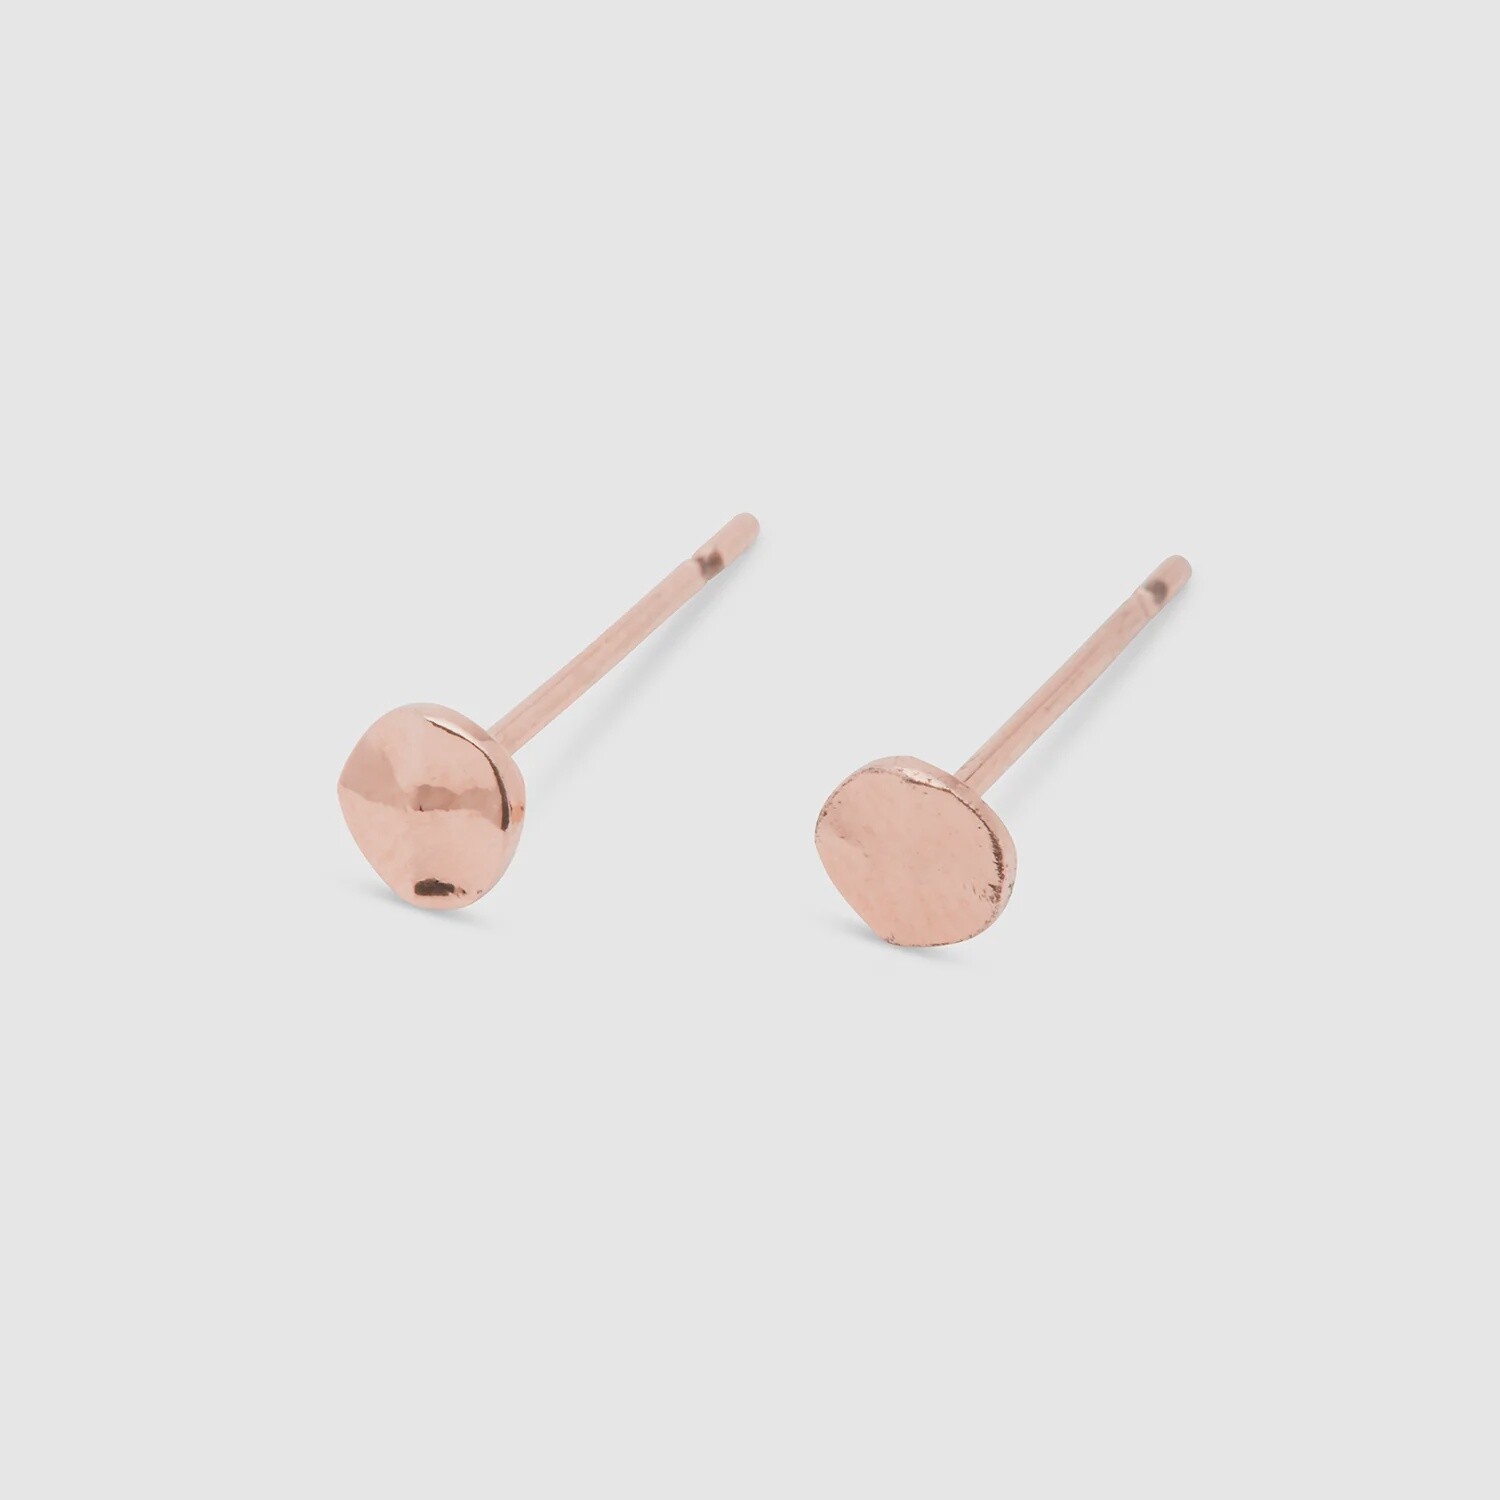 Chloe Mini Studs - Rose Gold Earrings